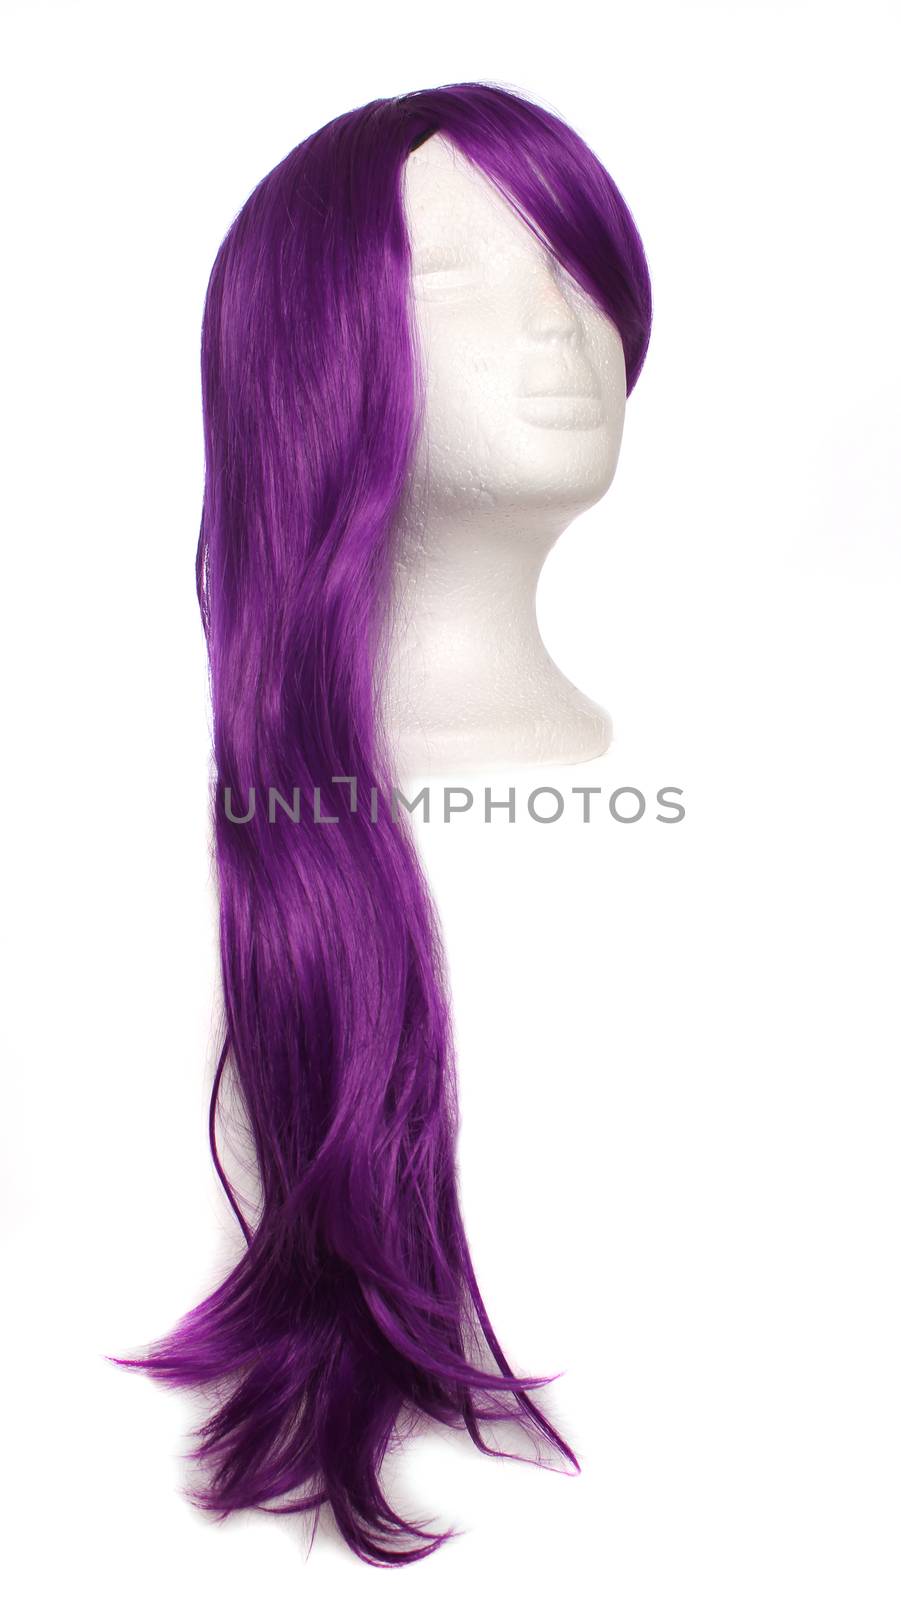 Purple Anime Style Wig on White Background